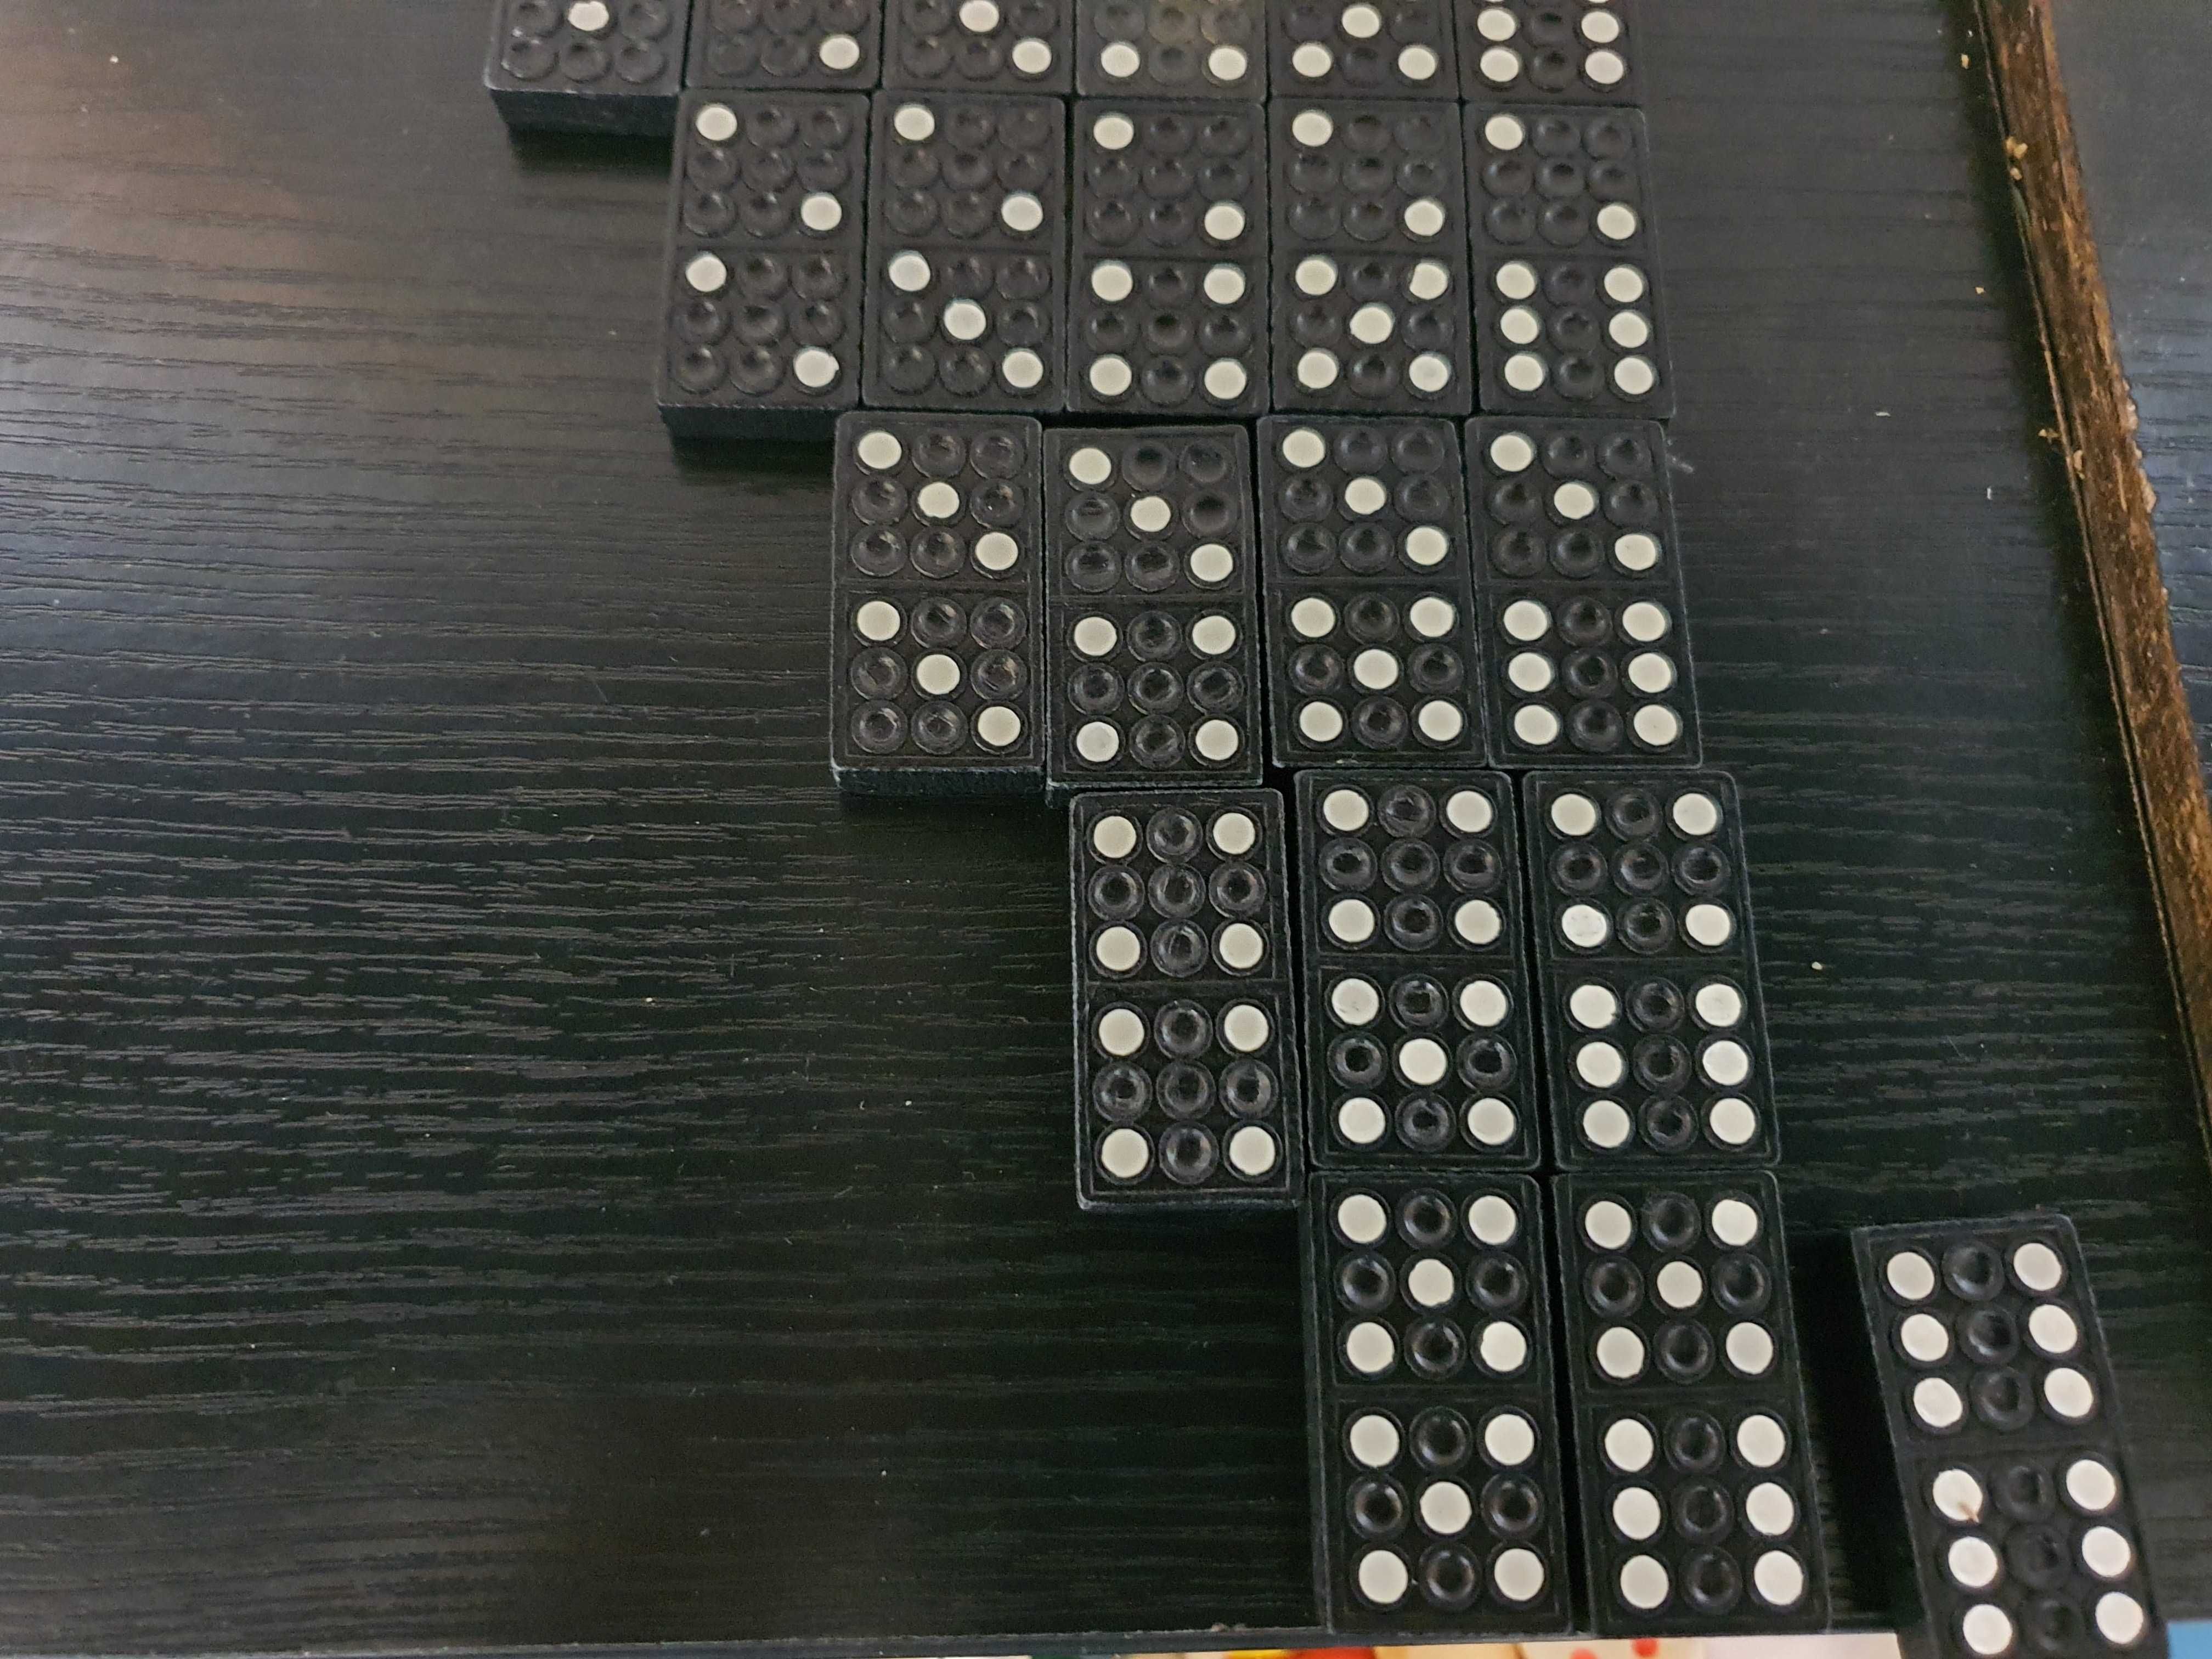 Joc de domino cu 28 piese de lemn